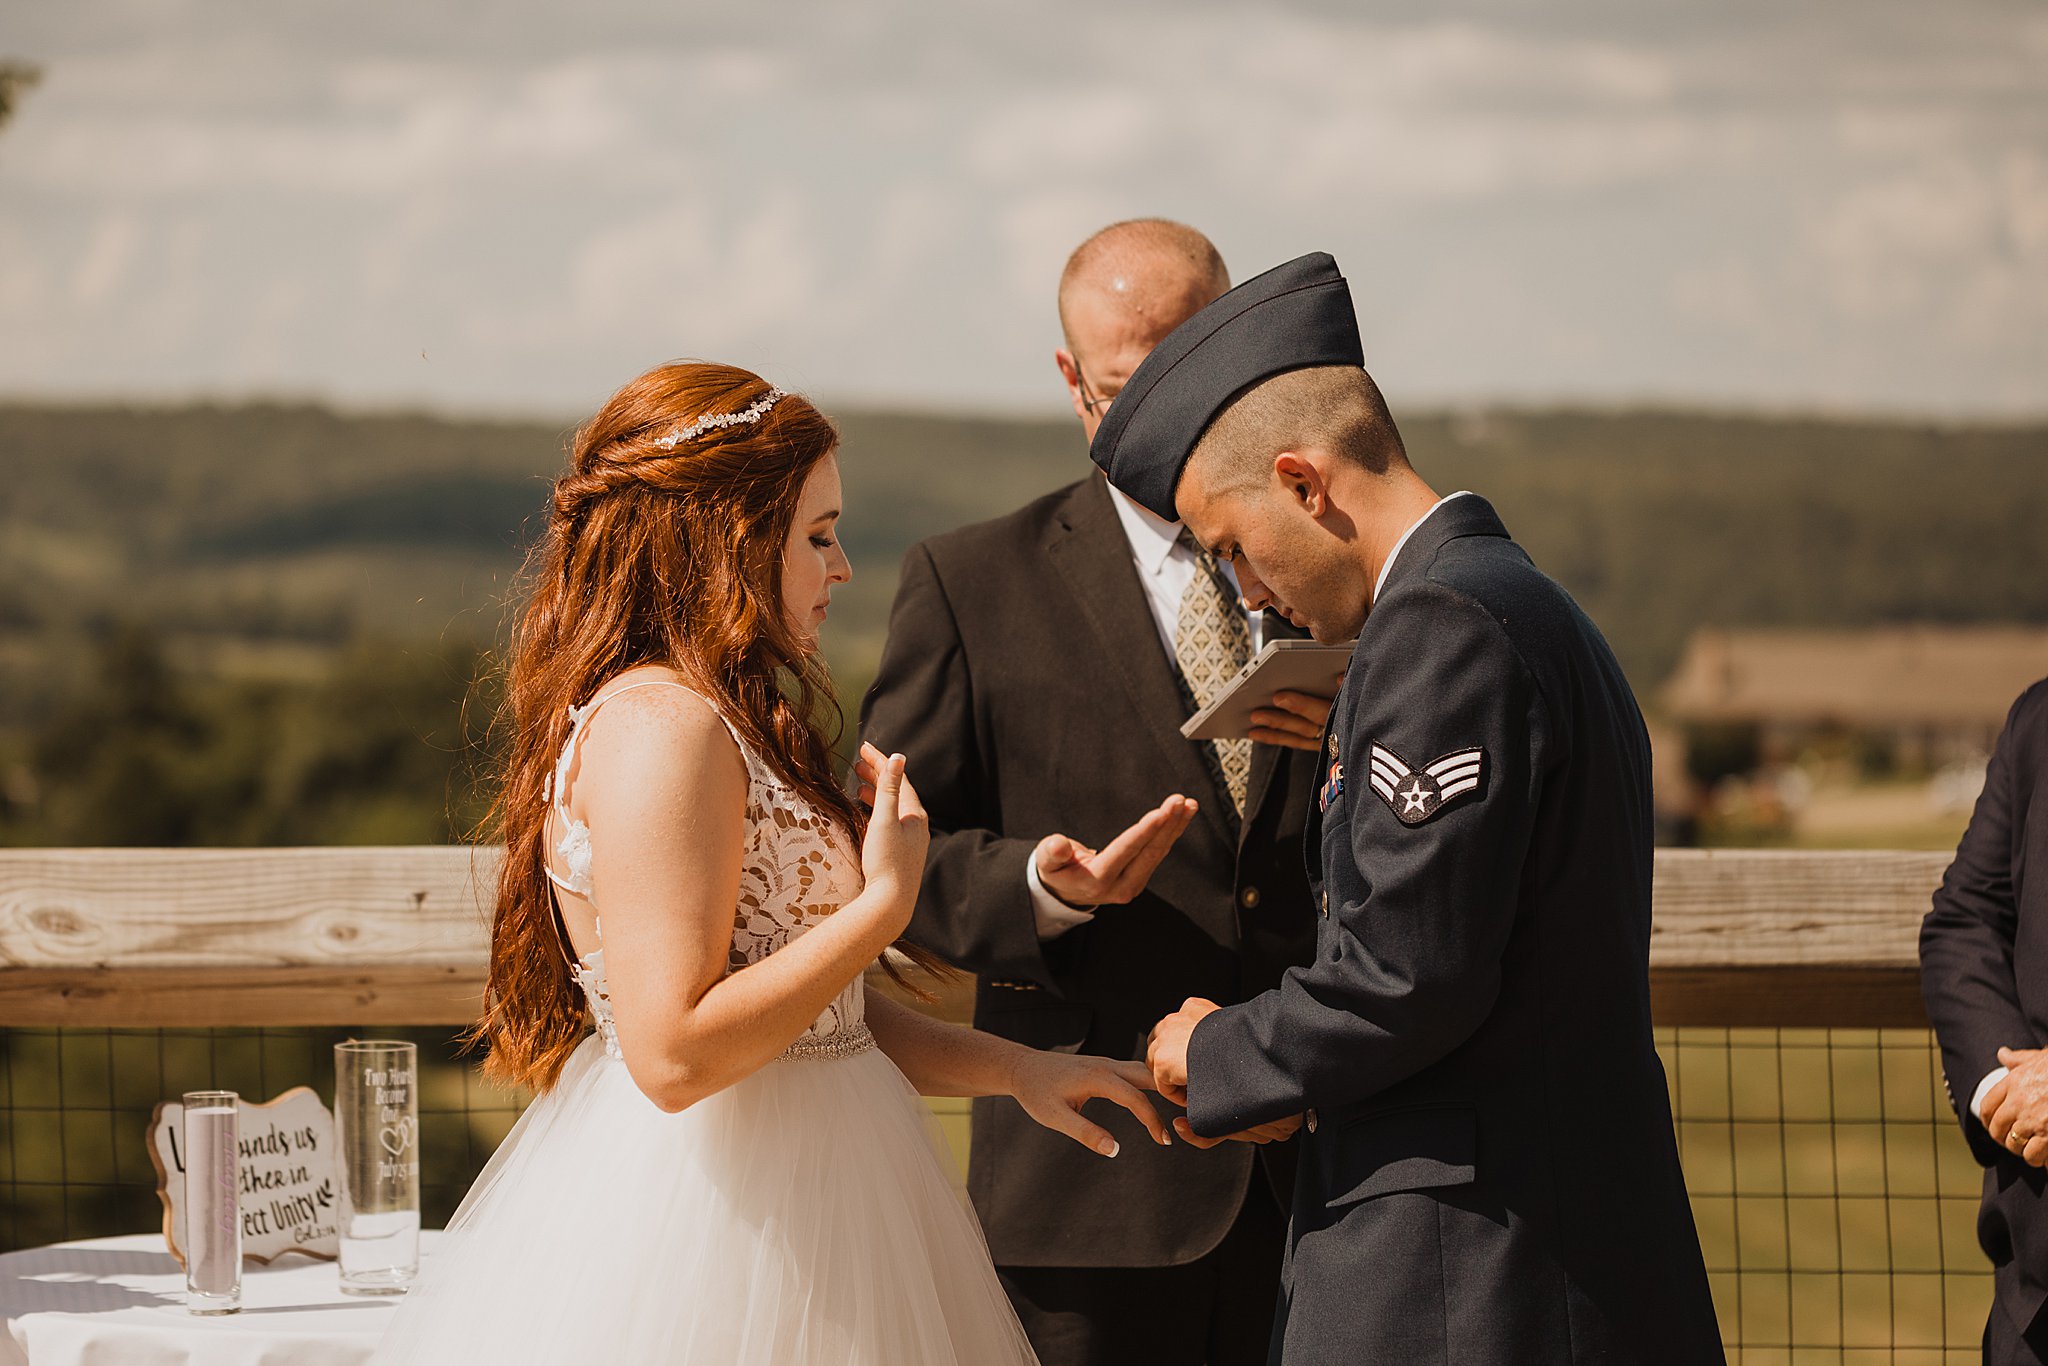 Chaumette Winery Wedding Ceremony | STL Wedding Photographer